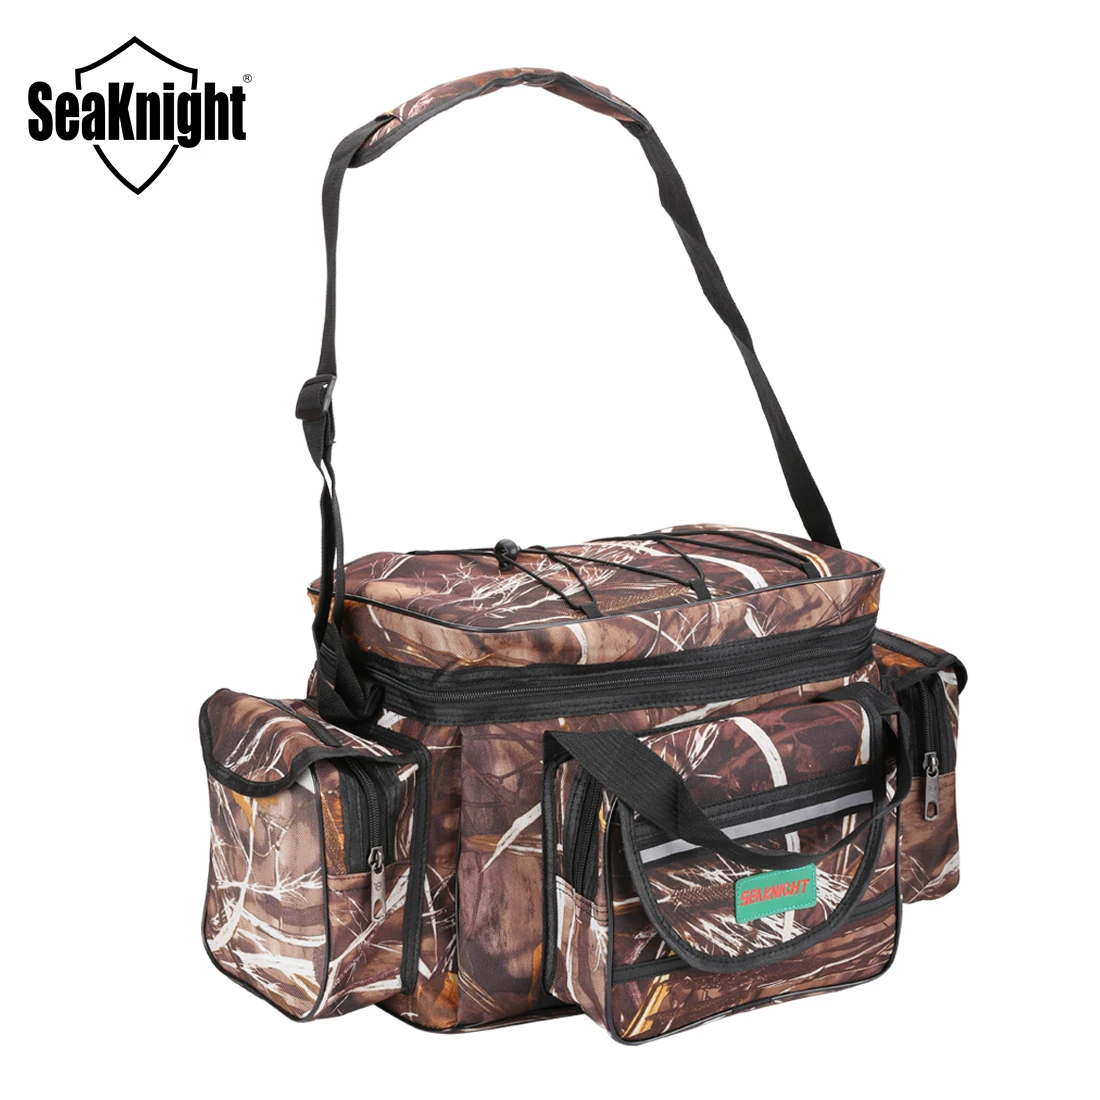 SeaKnight Brand SK003 22L Large Fishing Bag Waterproof Nylon  Multifunctional Fishing Tackle Pack Outdoor Shoulder Bag 50*27*28cm